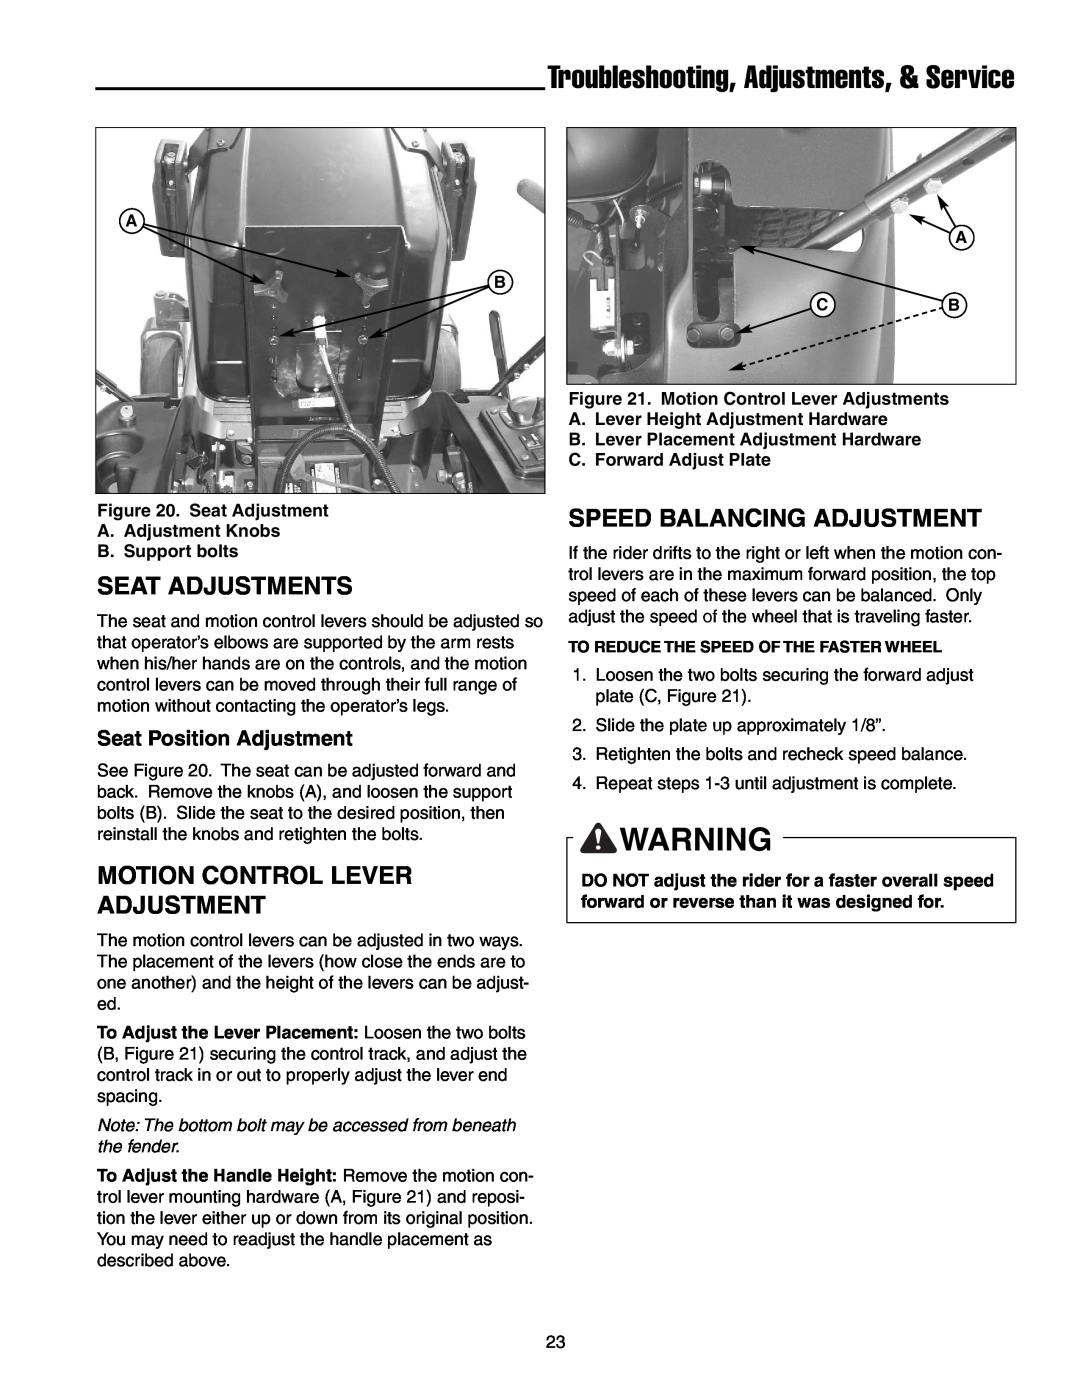 Snapper RZT22500BVE2 manual Troubleshooting, Adjustments, & Service, Seat Adjustments, Motion Control Lever Adjustment 